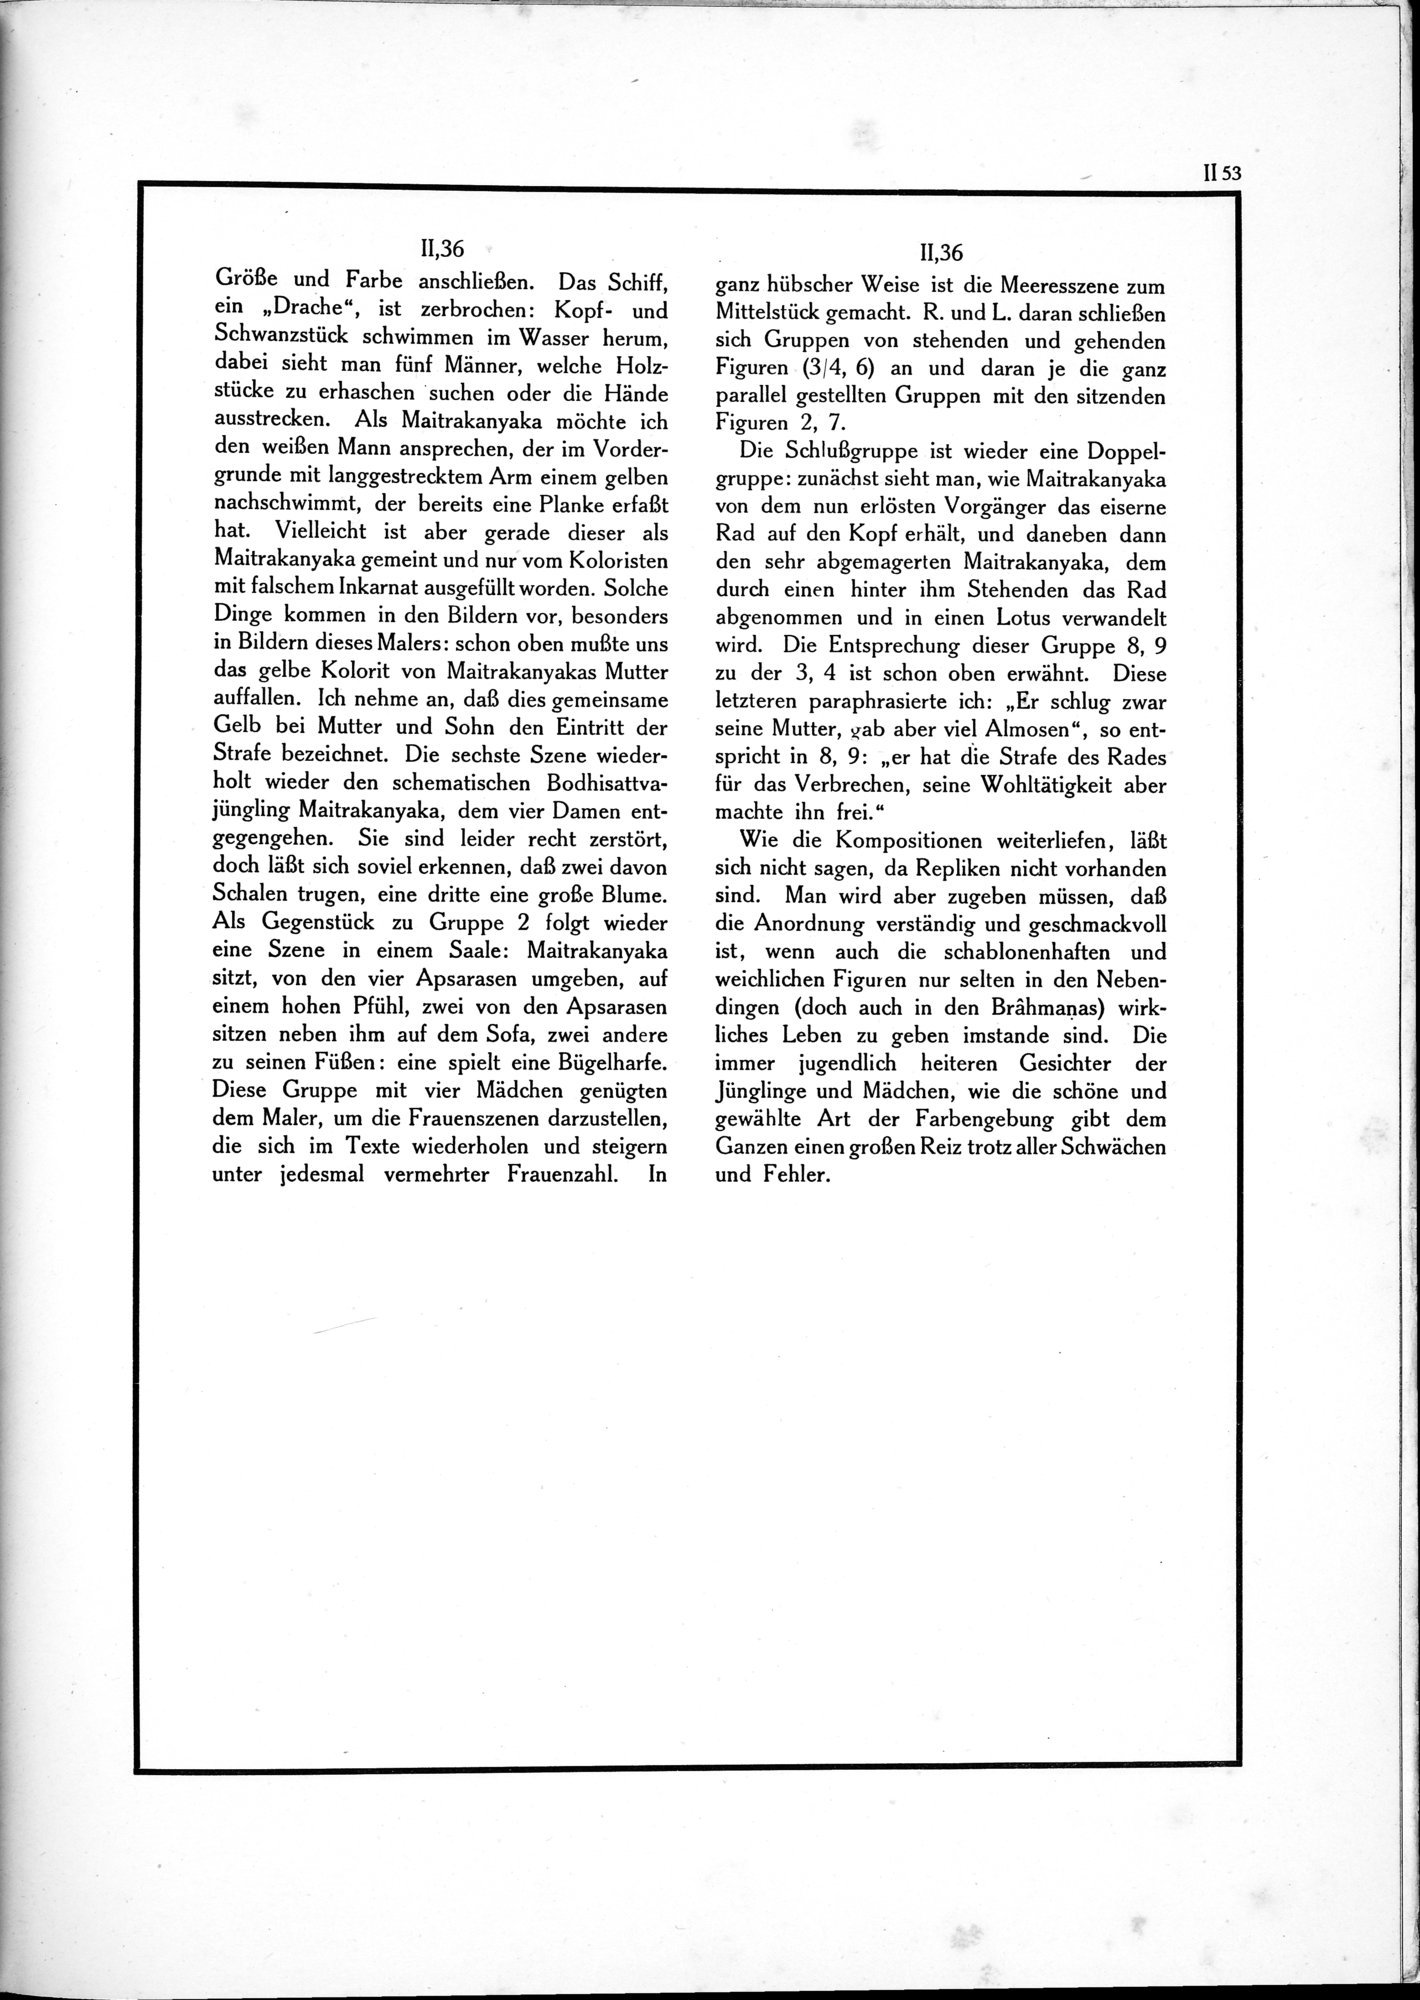 Alt-Kutscha : vol.1 / Page 163 (Grayscale High Resolution Image)